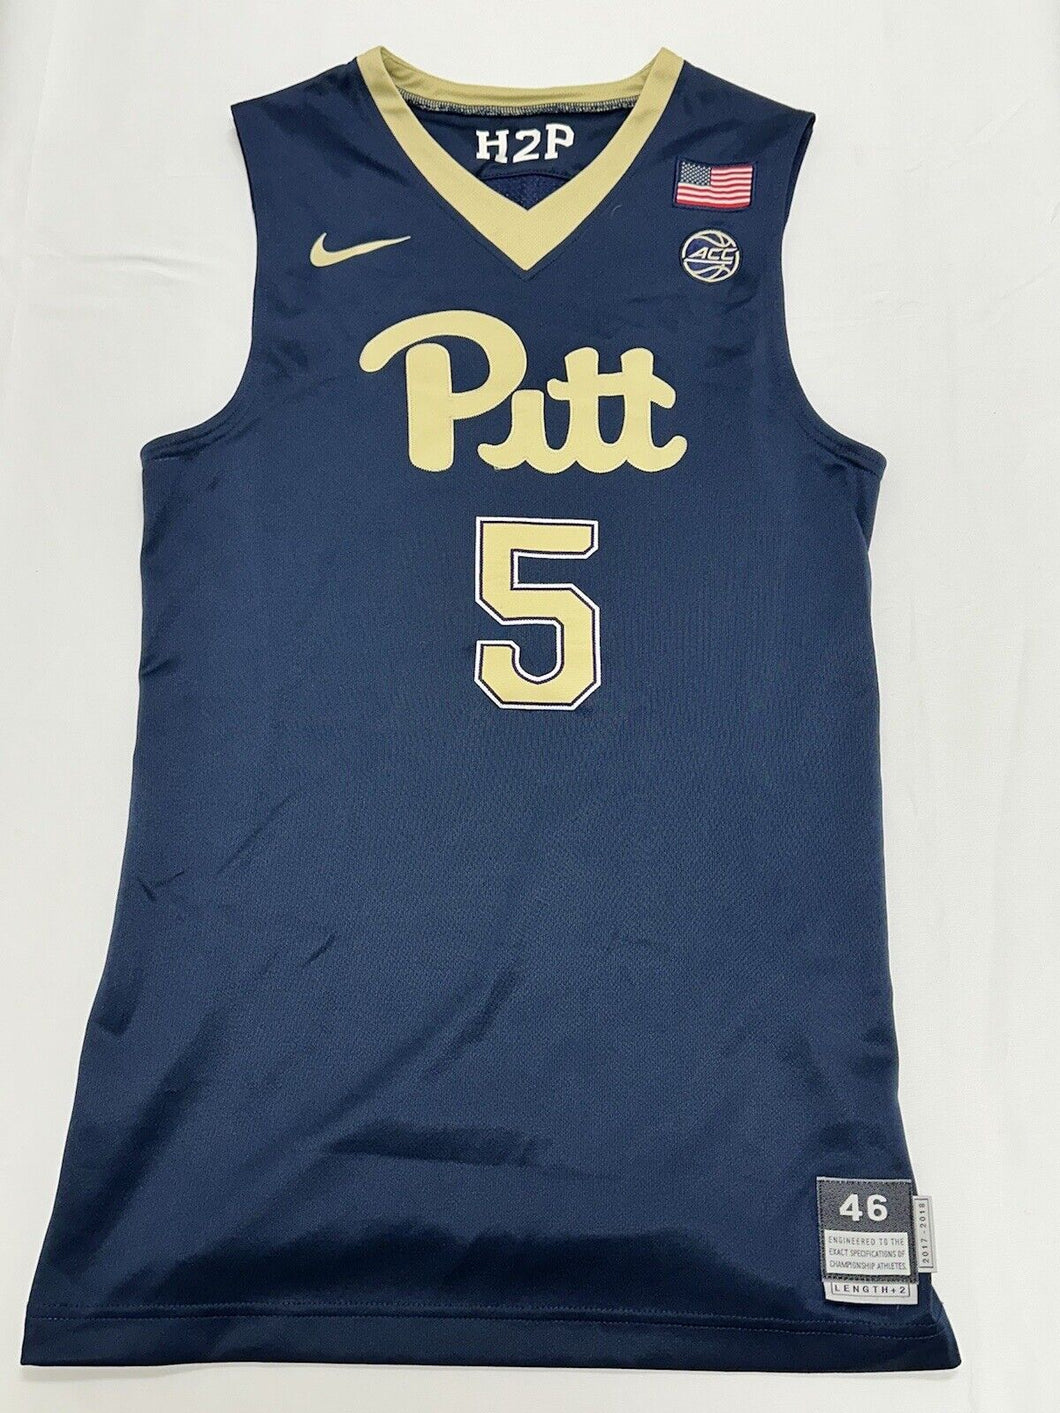 2017 - 2018 Pitt Panthers Game Worn Nike Women's Basketball Jersey Size 46 +2